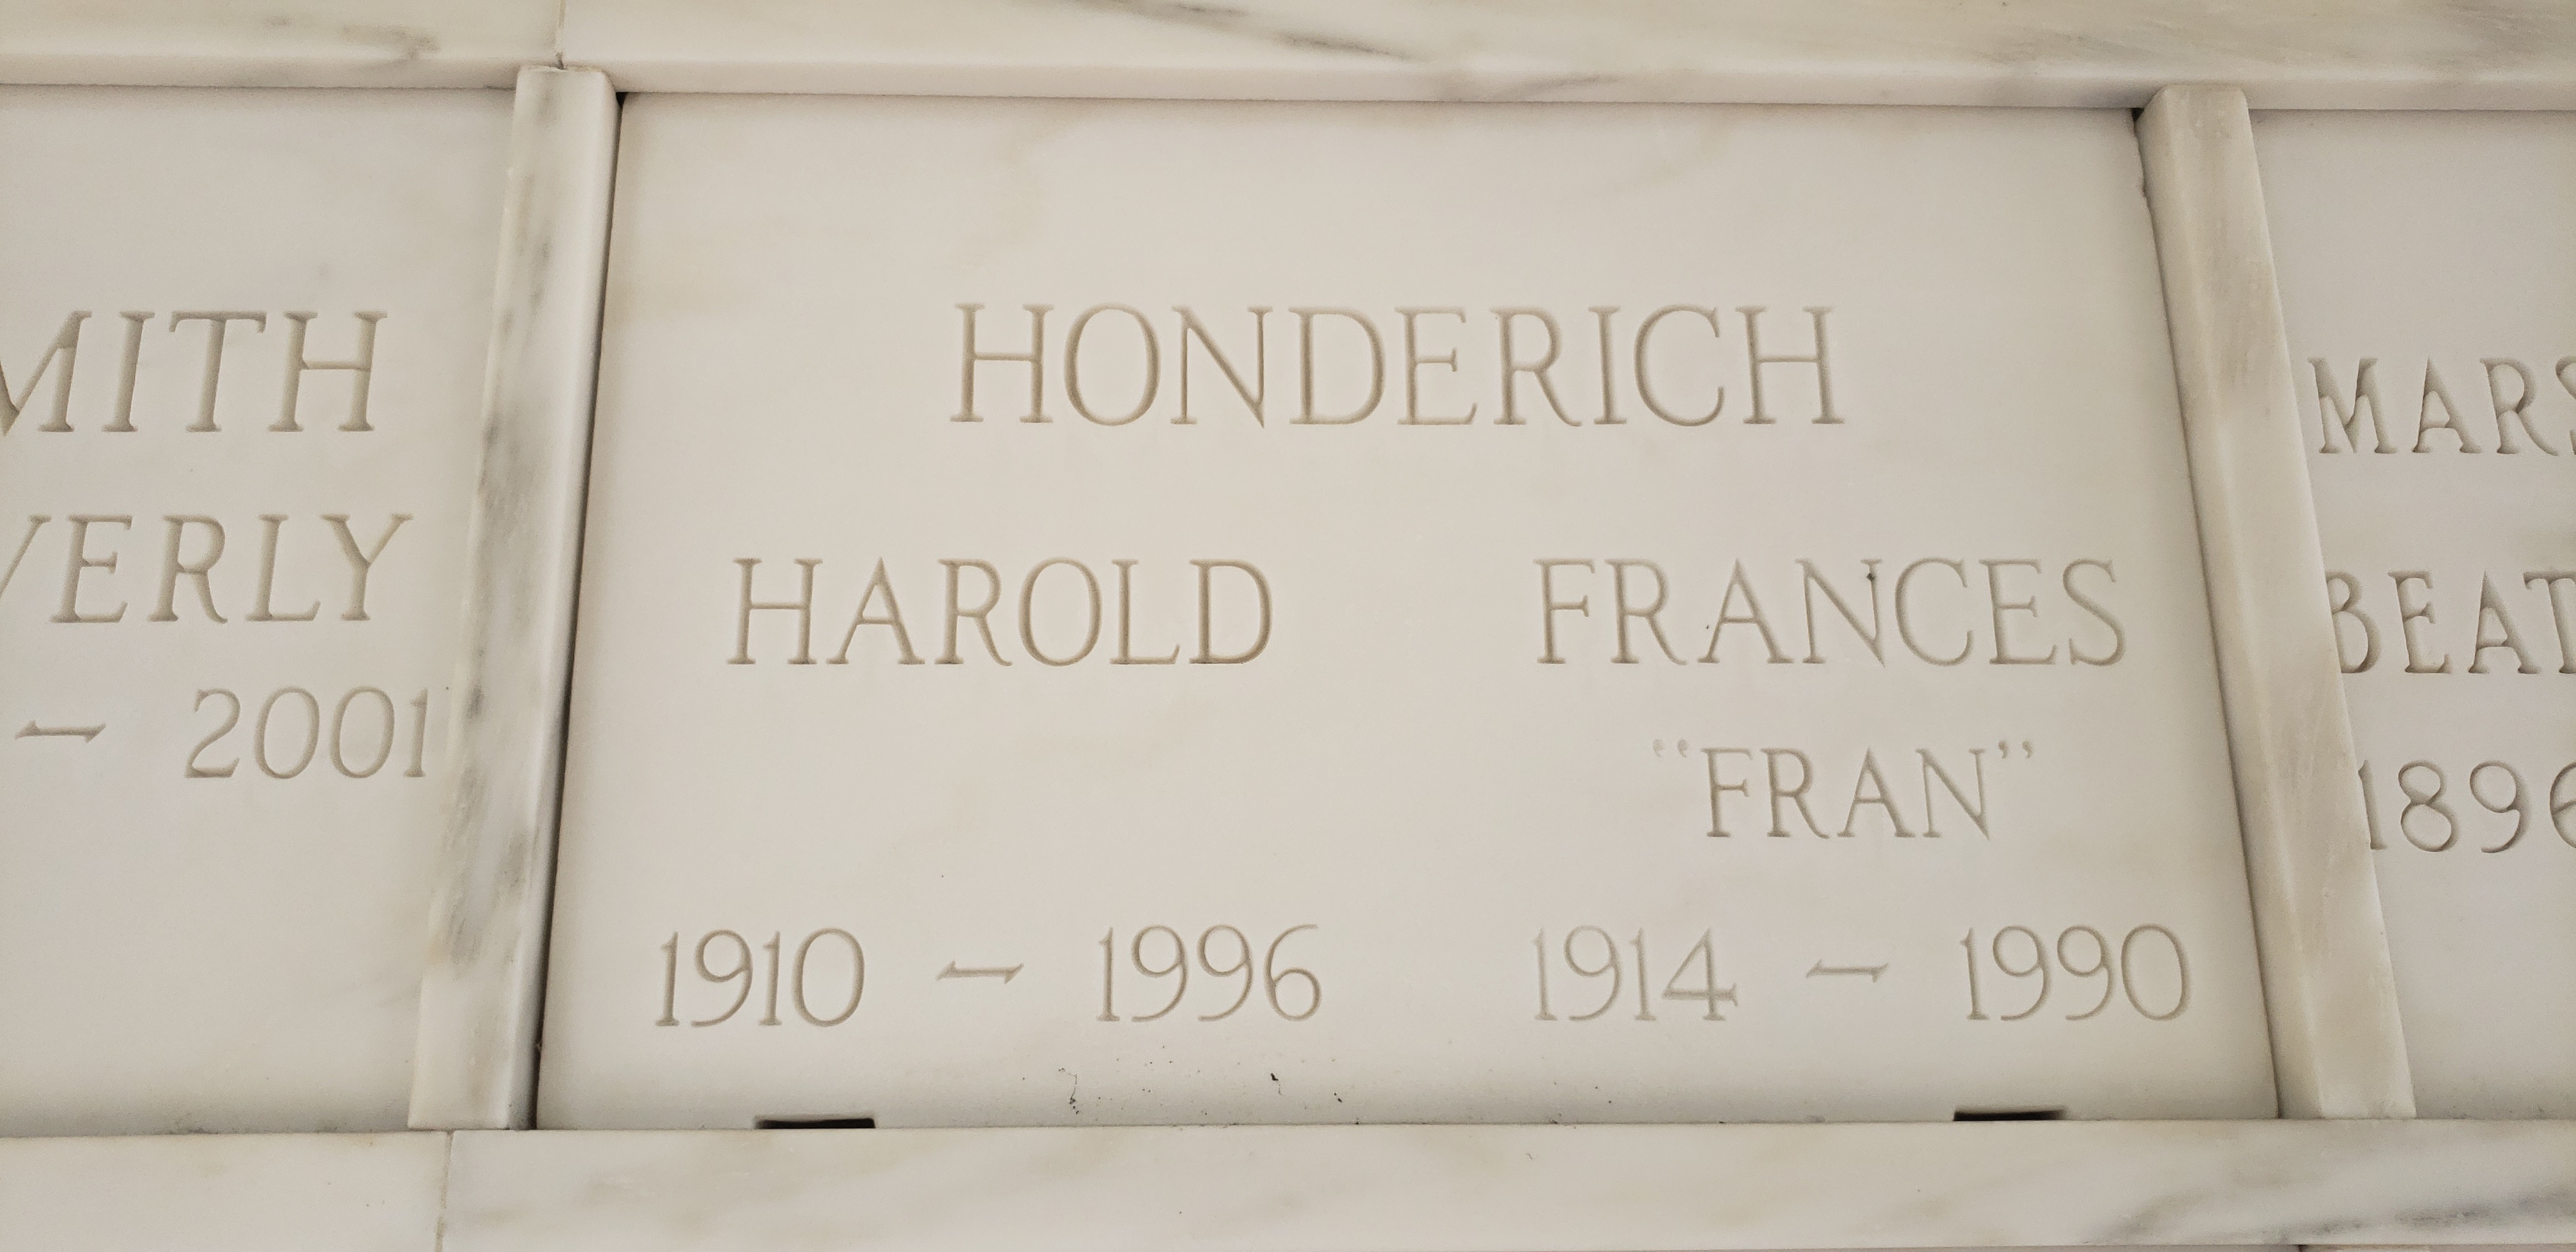 Harold Honderich